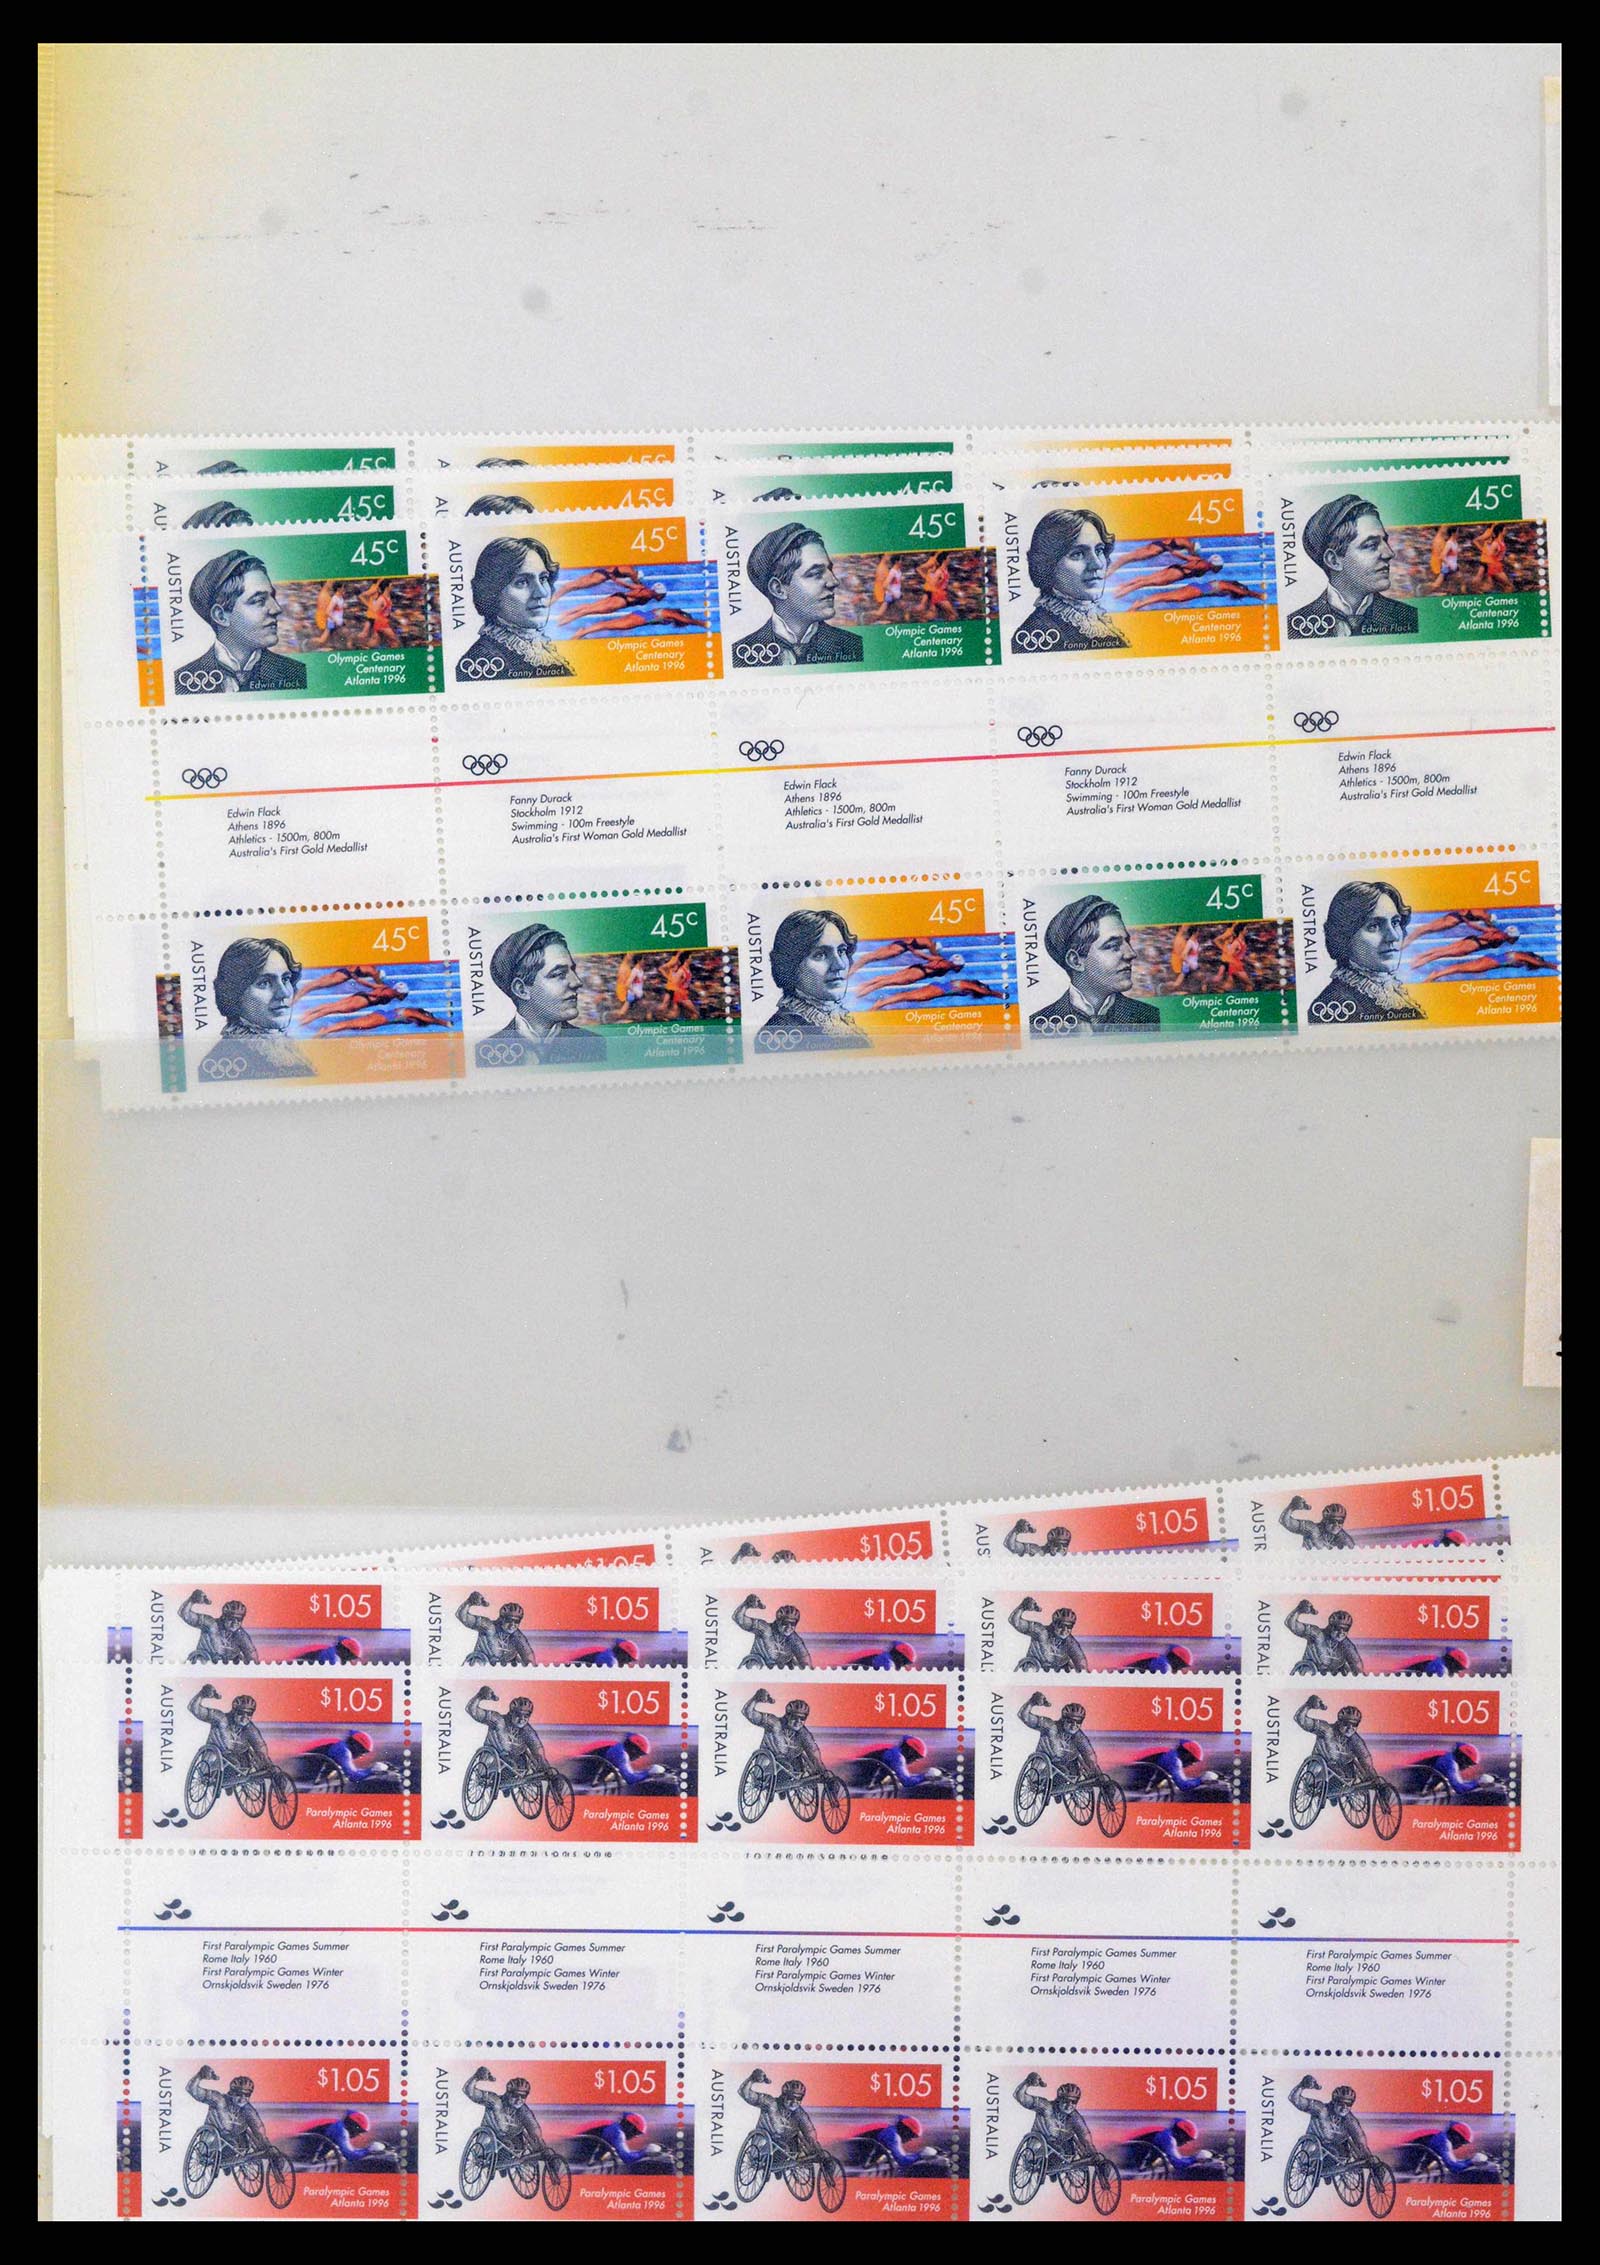 37670 0162 - Stamp collection 37670 Australia gutterpairs 1968-2006.